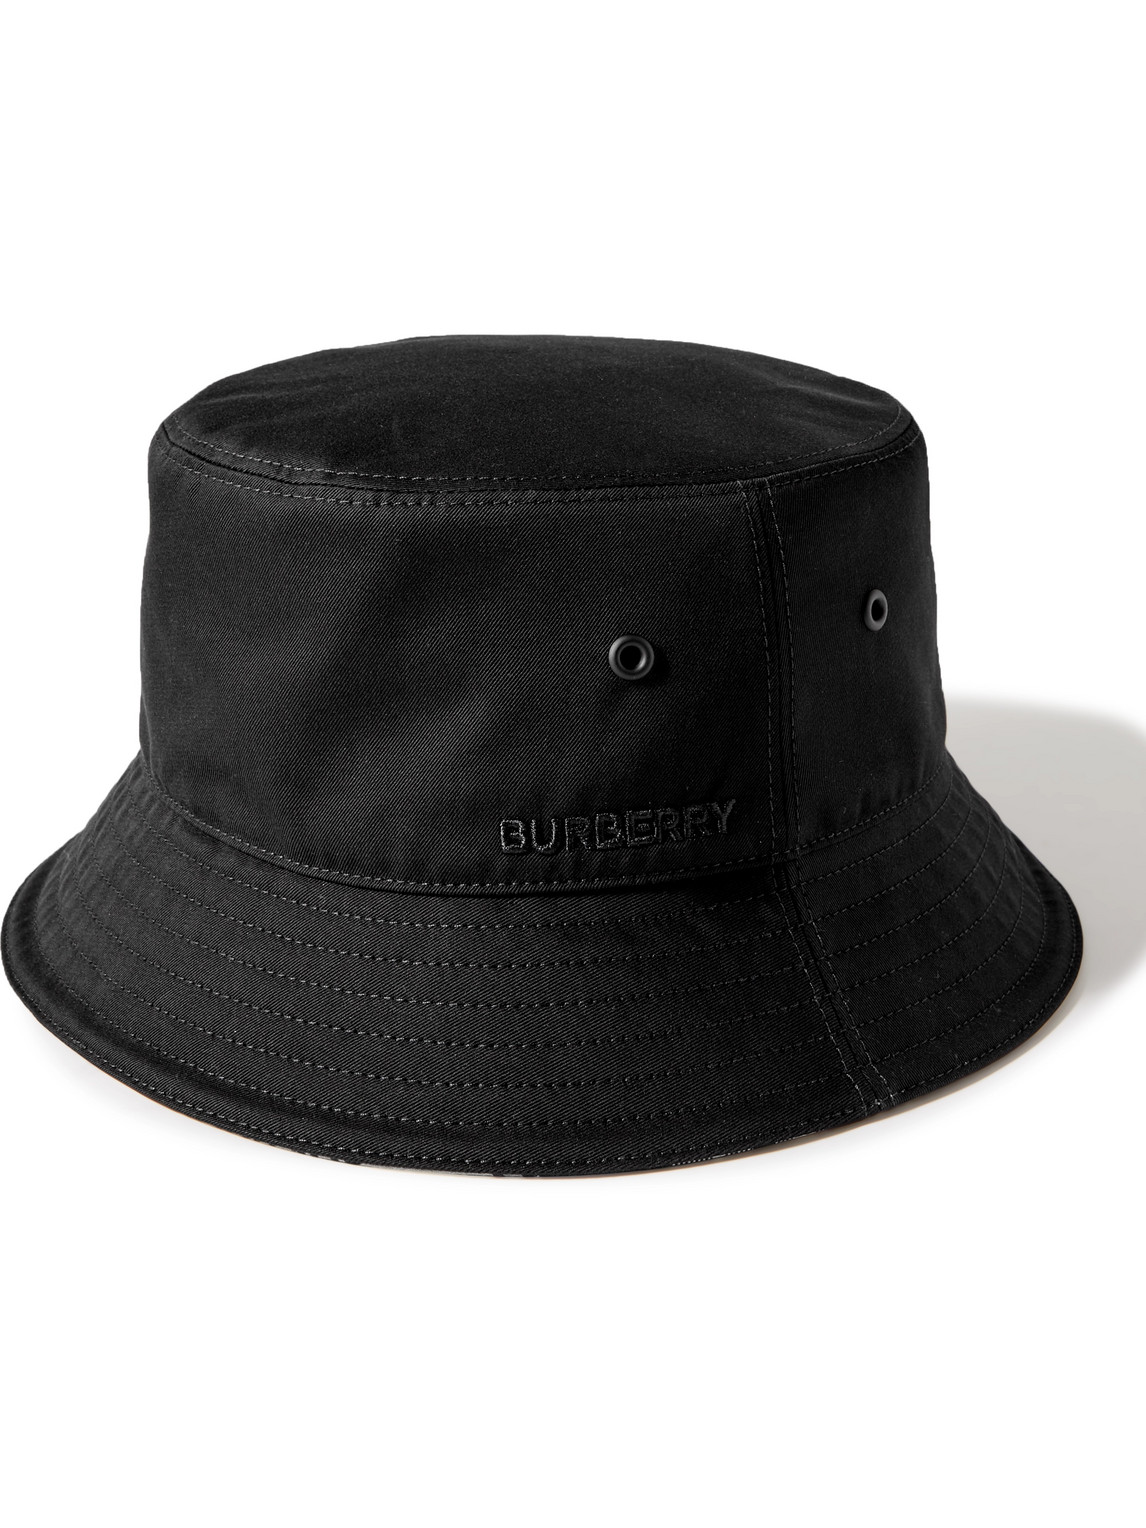 BURBERRY LOGO-EMBROIDERED COTTON-GABARDINE BUCKET HAT